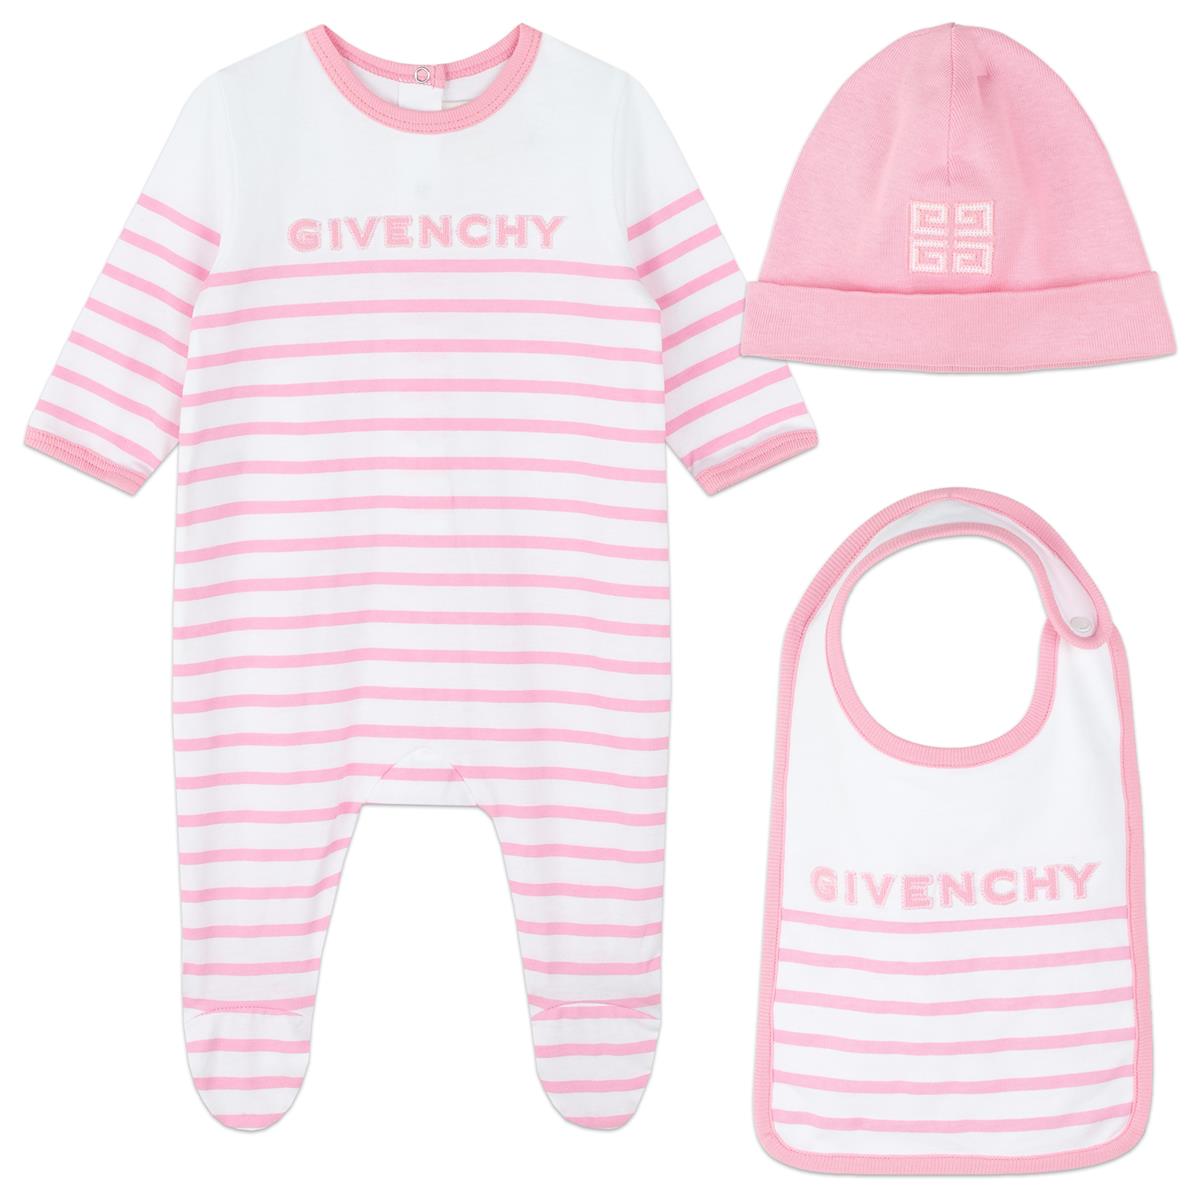 Baby Boys & Girls Pink Stripes Cotton Babysuit Set